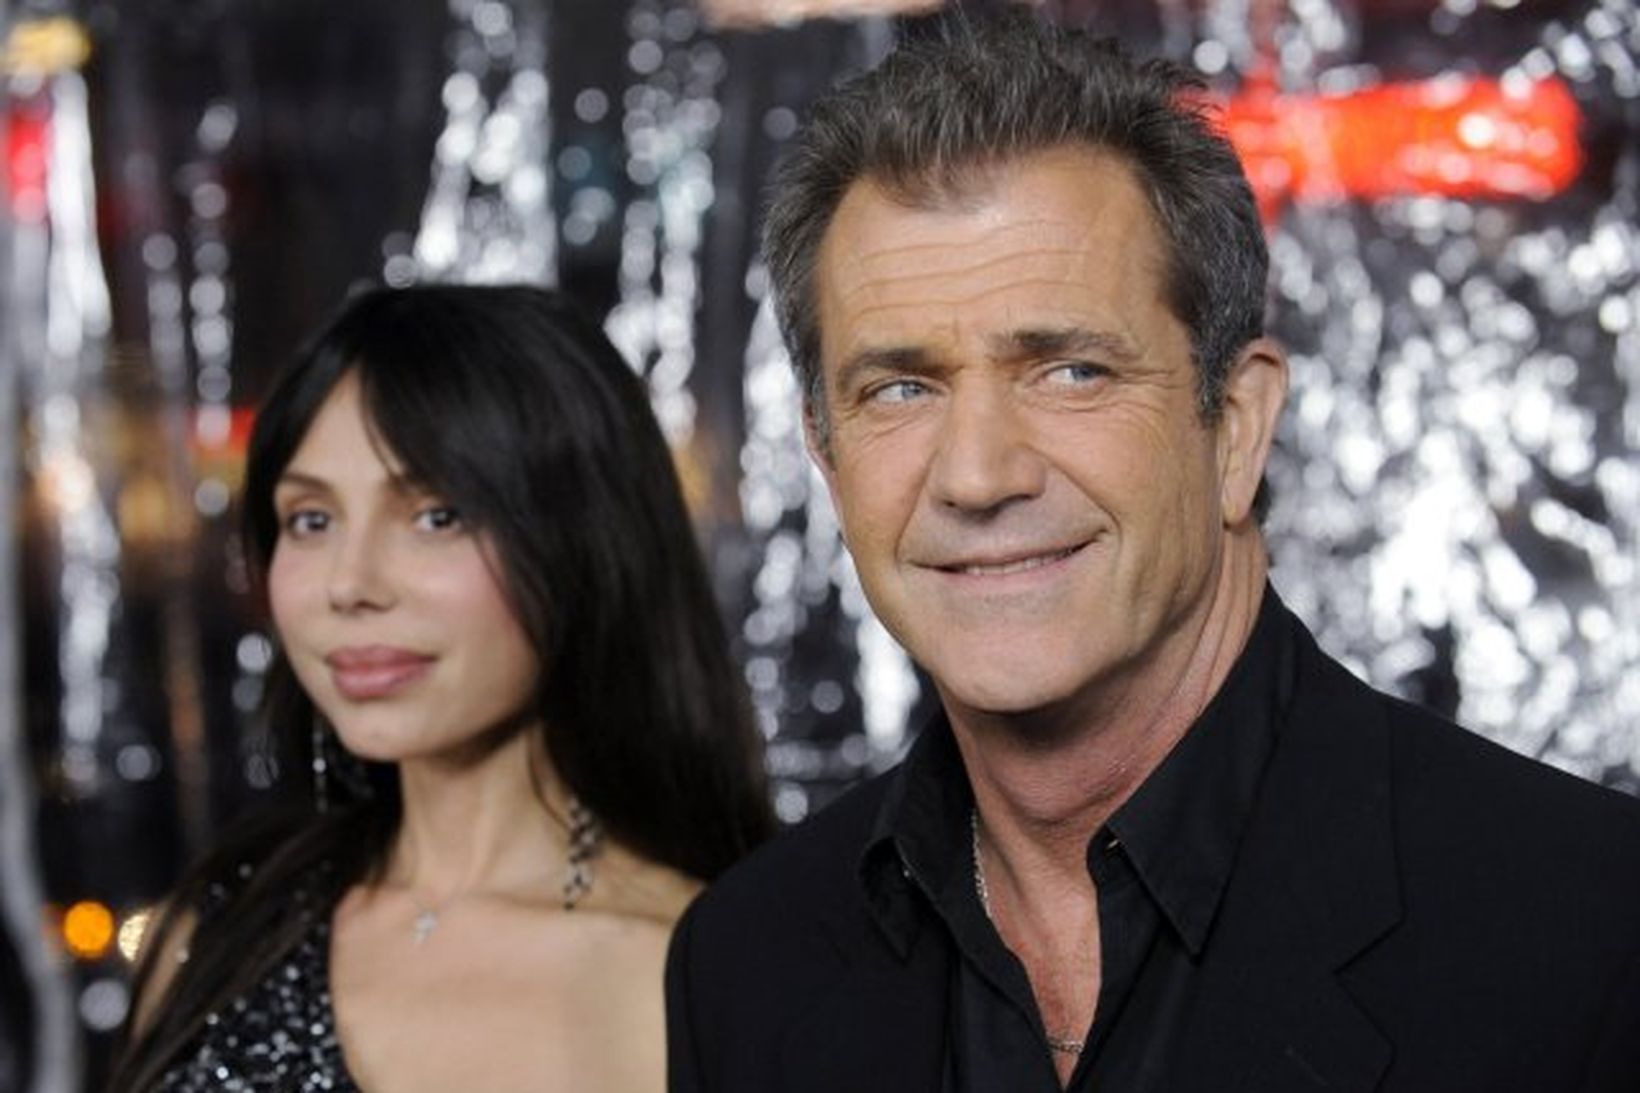 Mel Gibson ásamt sambýliskonu sinni Oksana Grigorieva